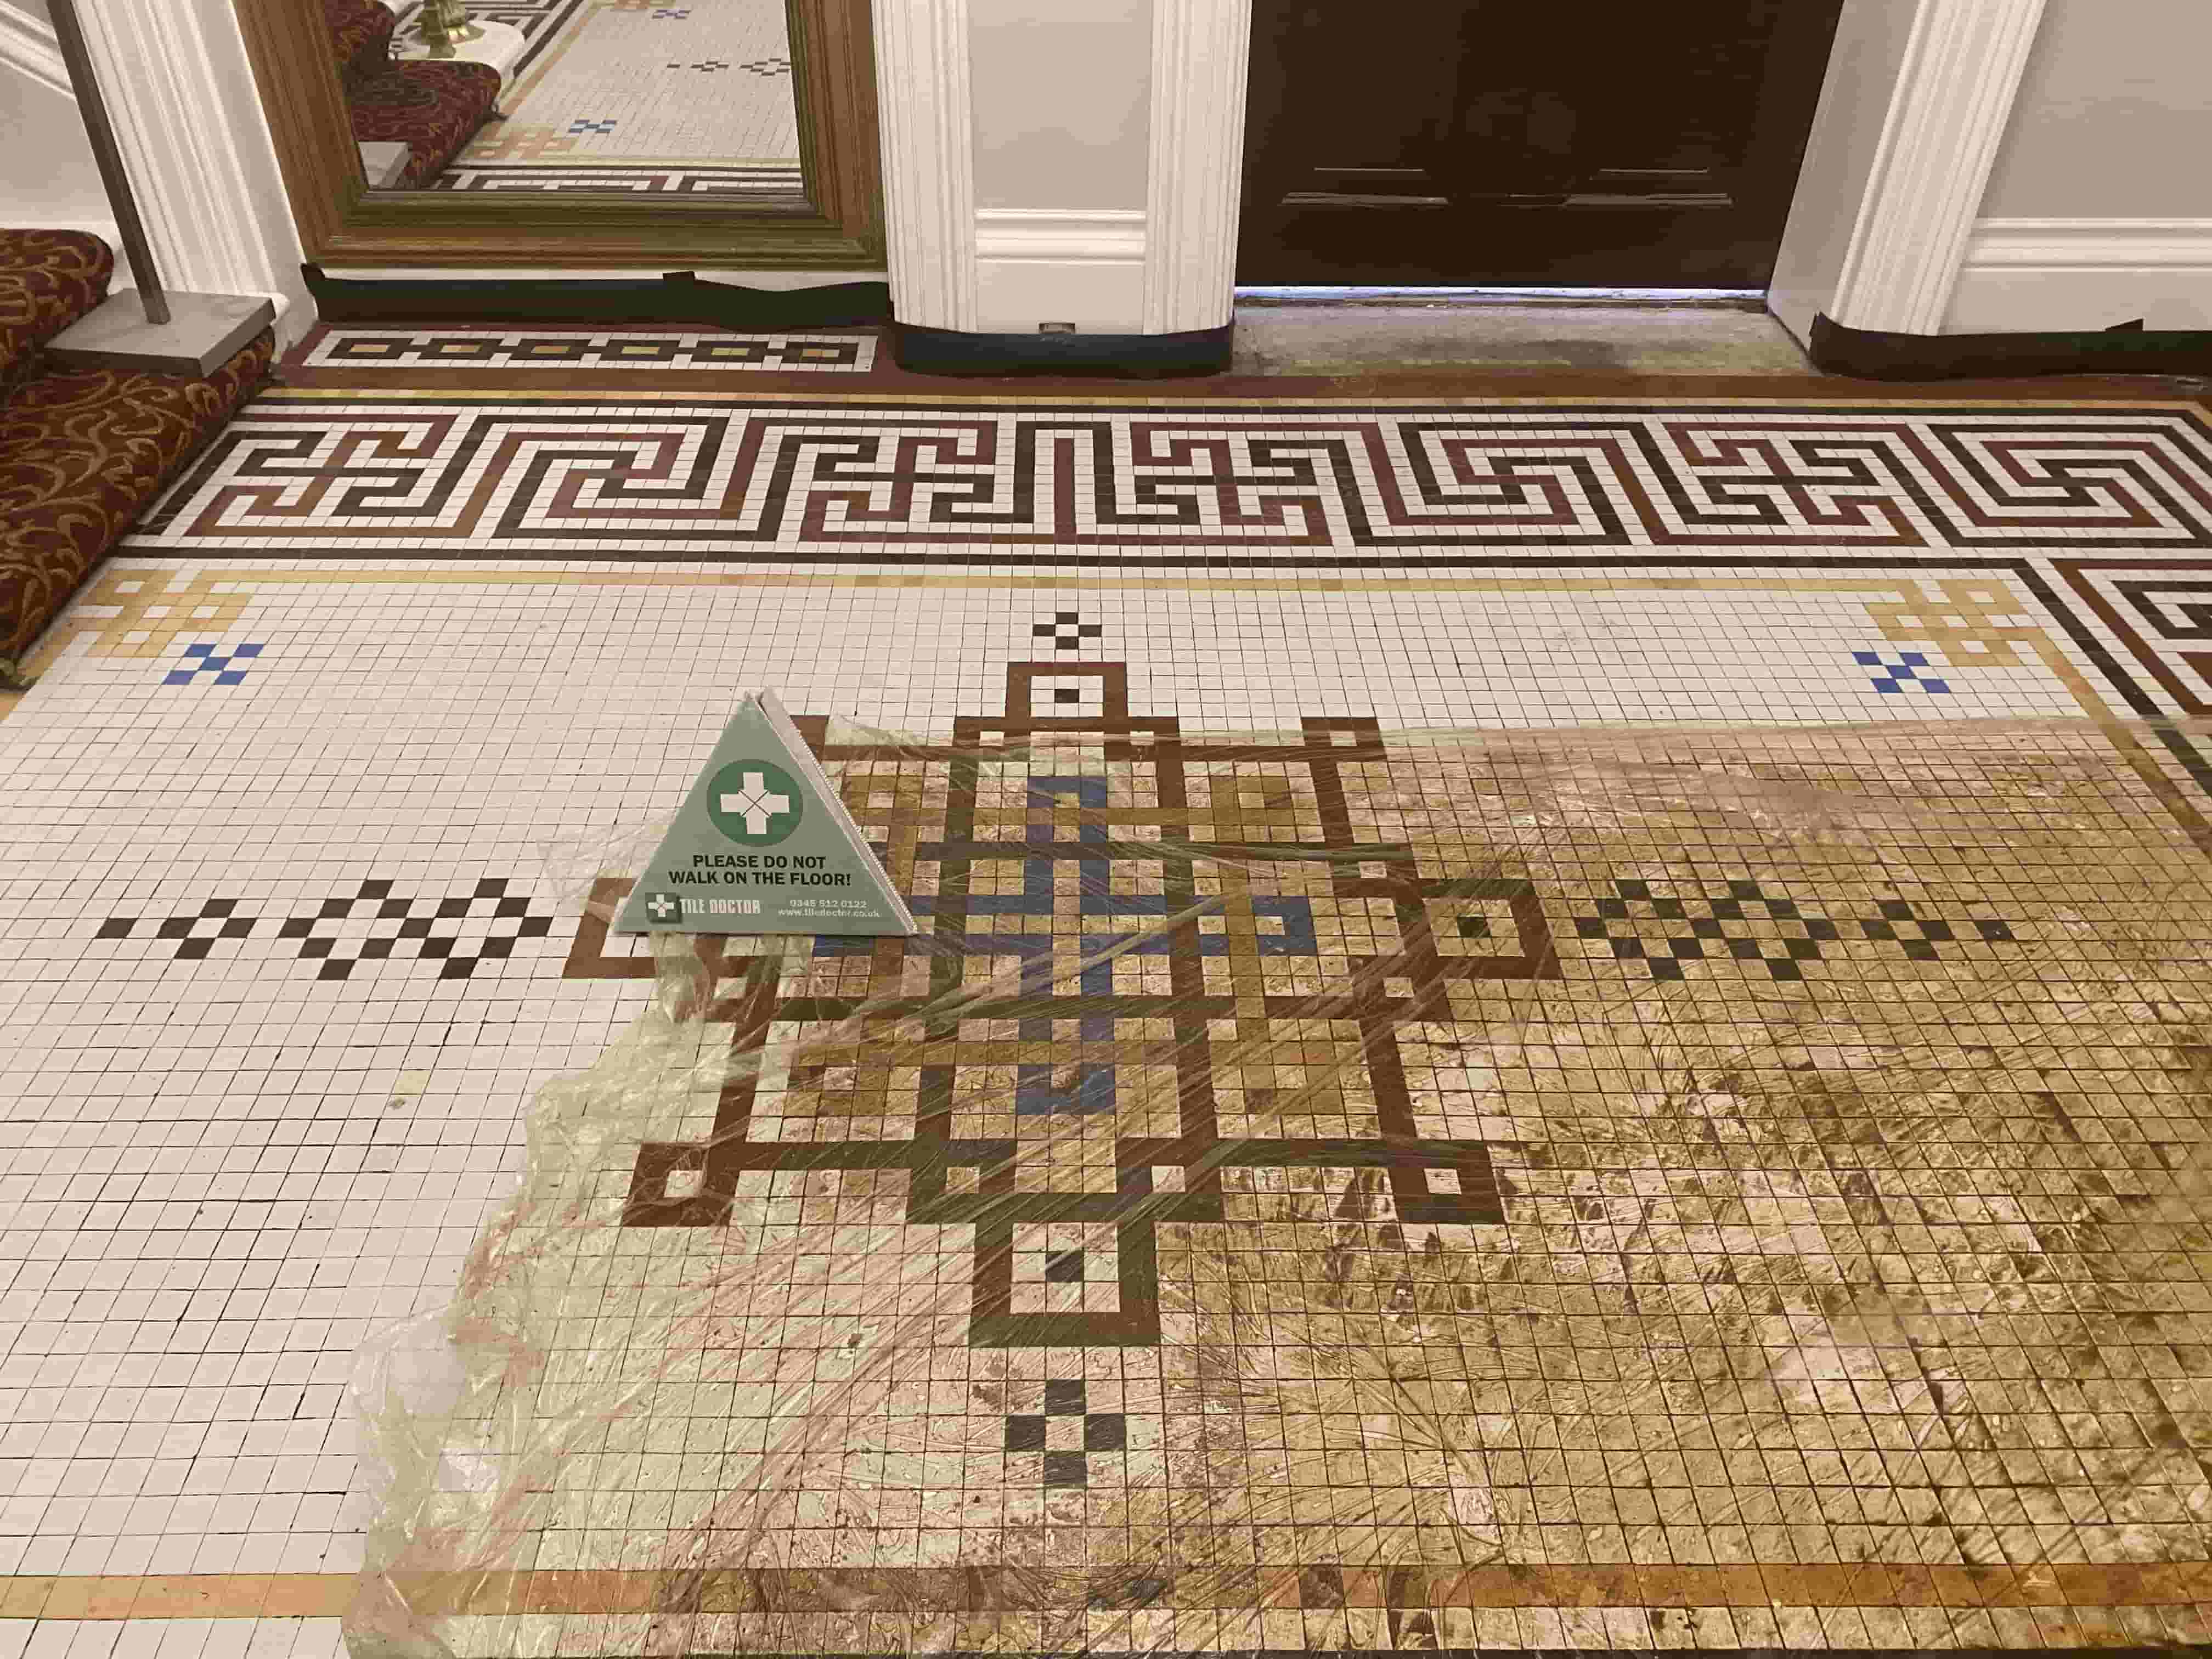 Hotel Tesserae Stone Mosaic Tiled Floor During Renovation Taplow